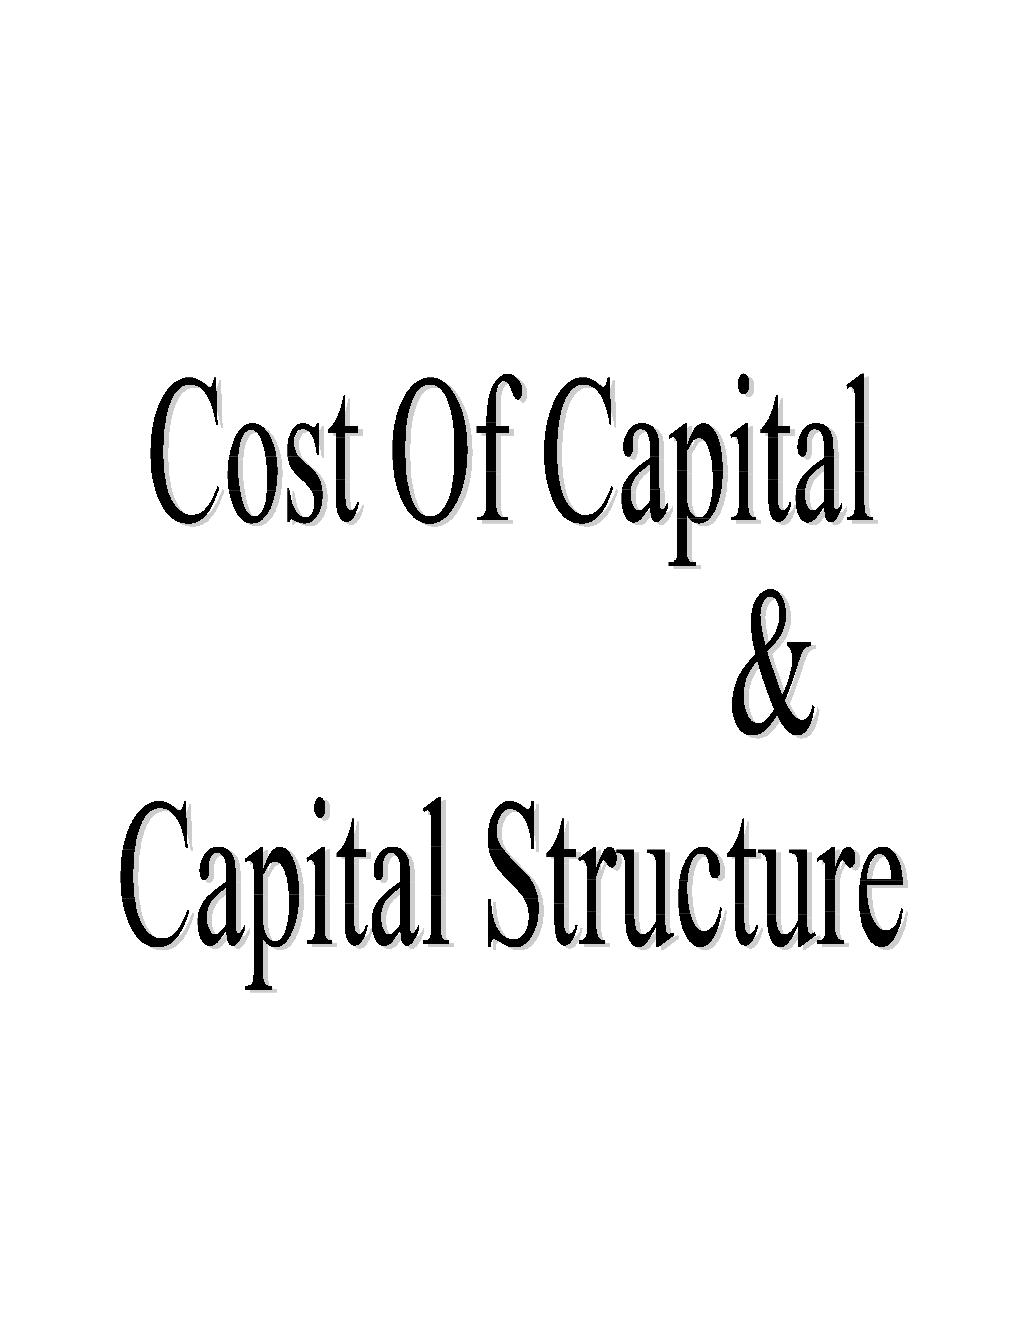 XYZ Ltd. Has the Following Book Value Capital Structure